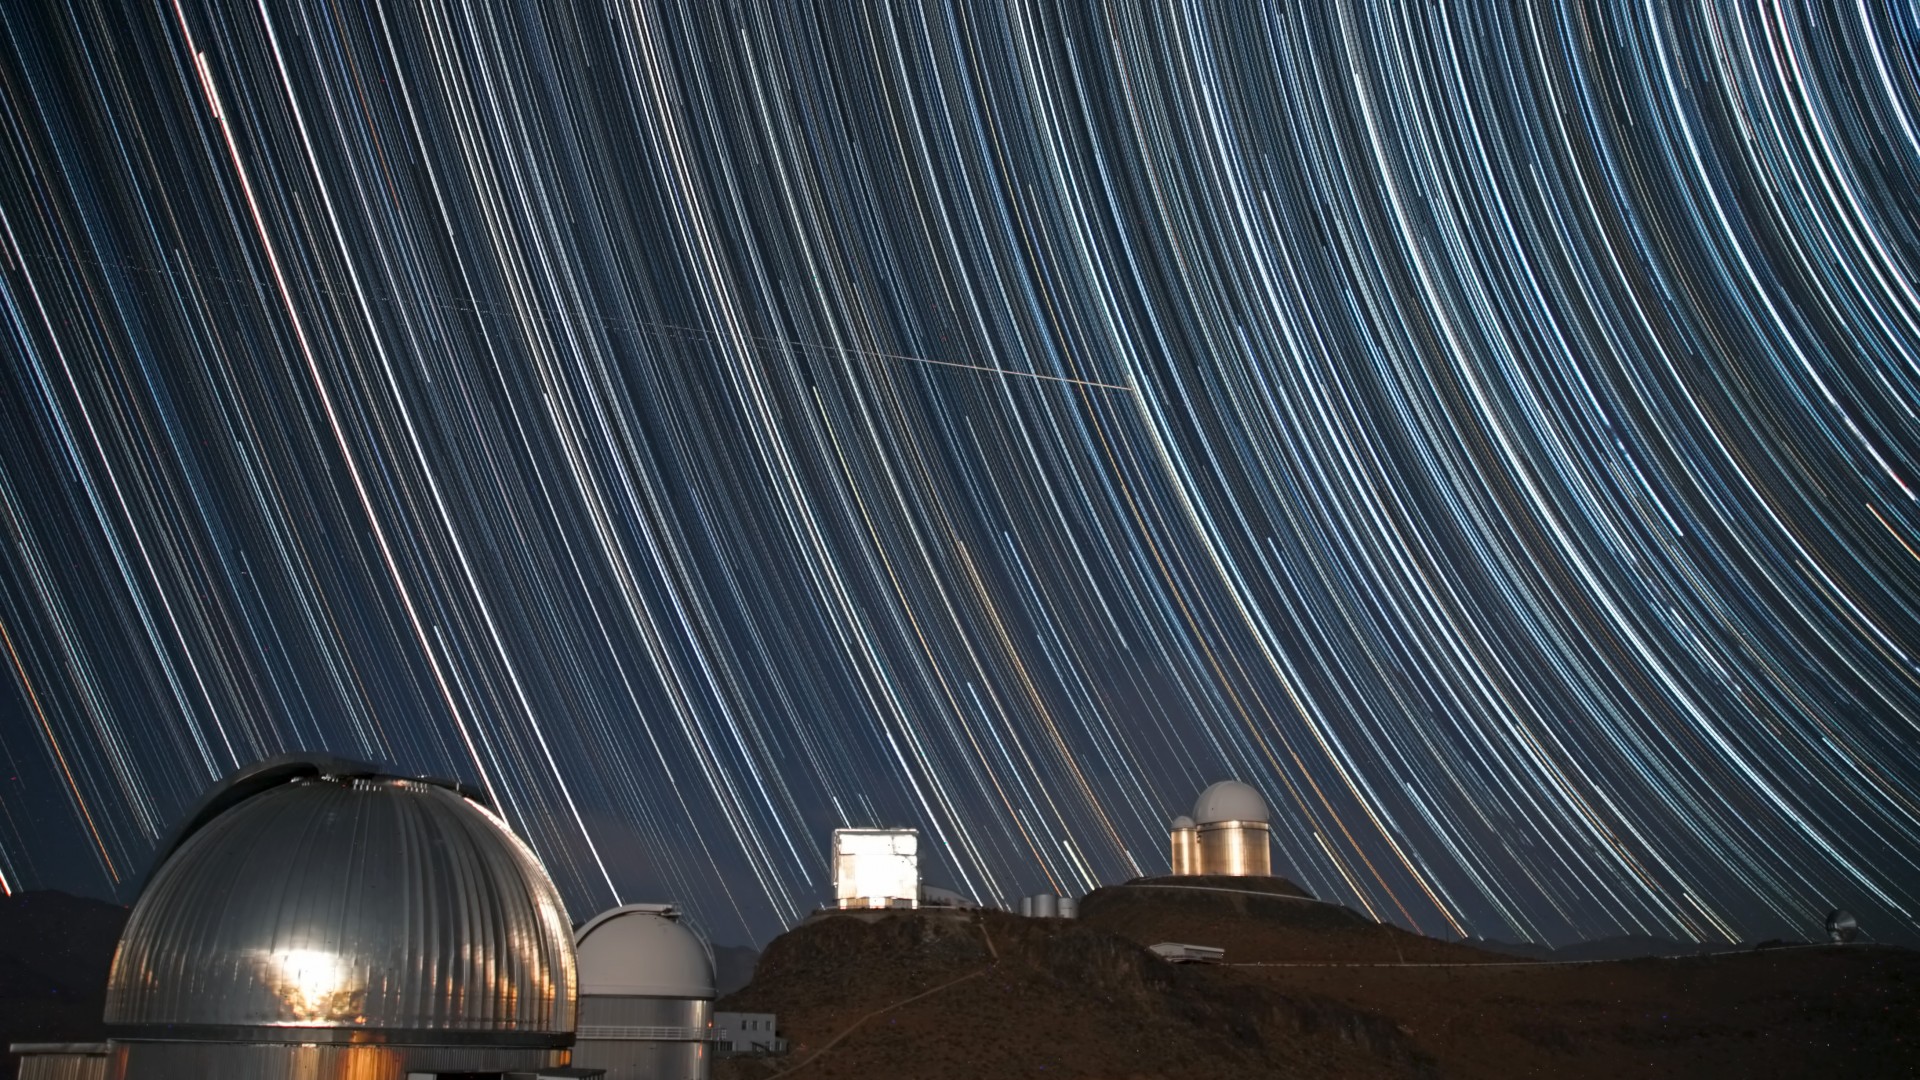 выдержка, обсерватория, астрономия, sky, exposure, observatory, astronomy, photo, stars, night (horizontal)